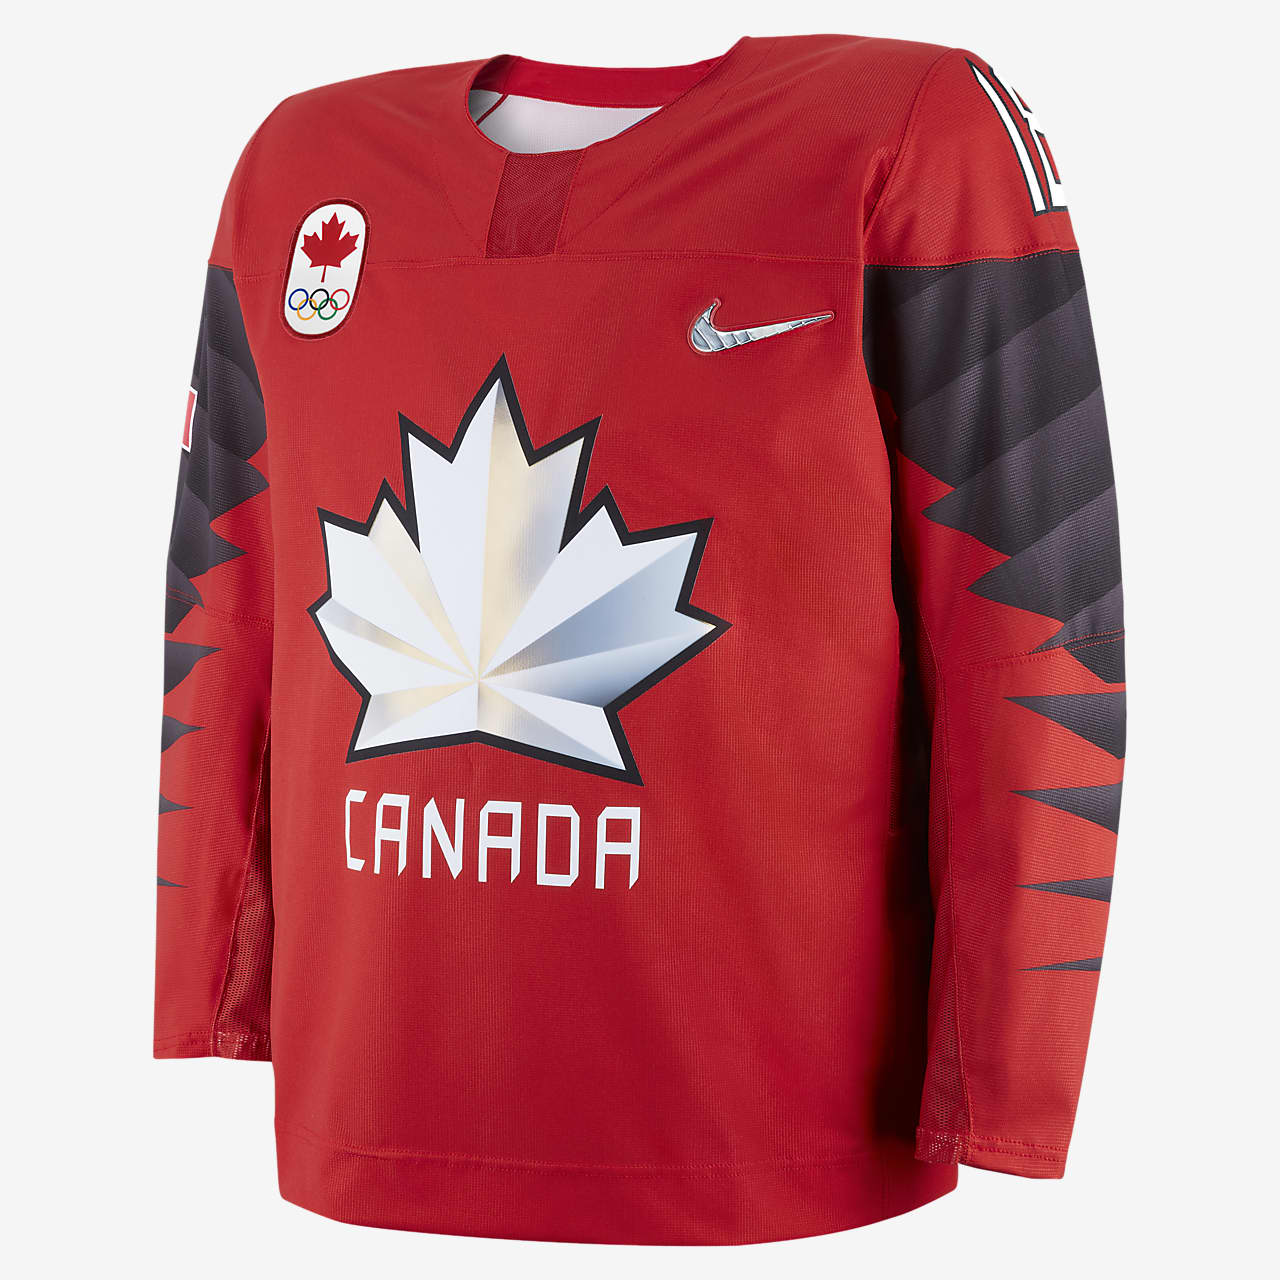 Team Canada Replica Men's Hockey Jersey 